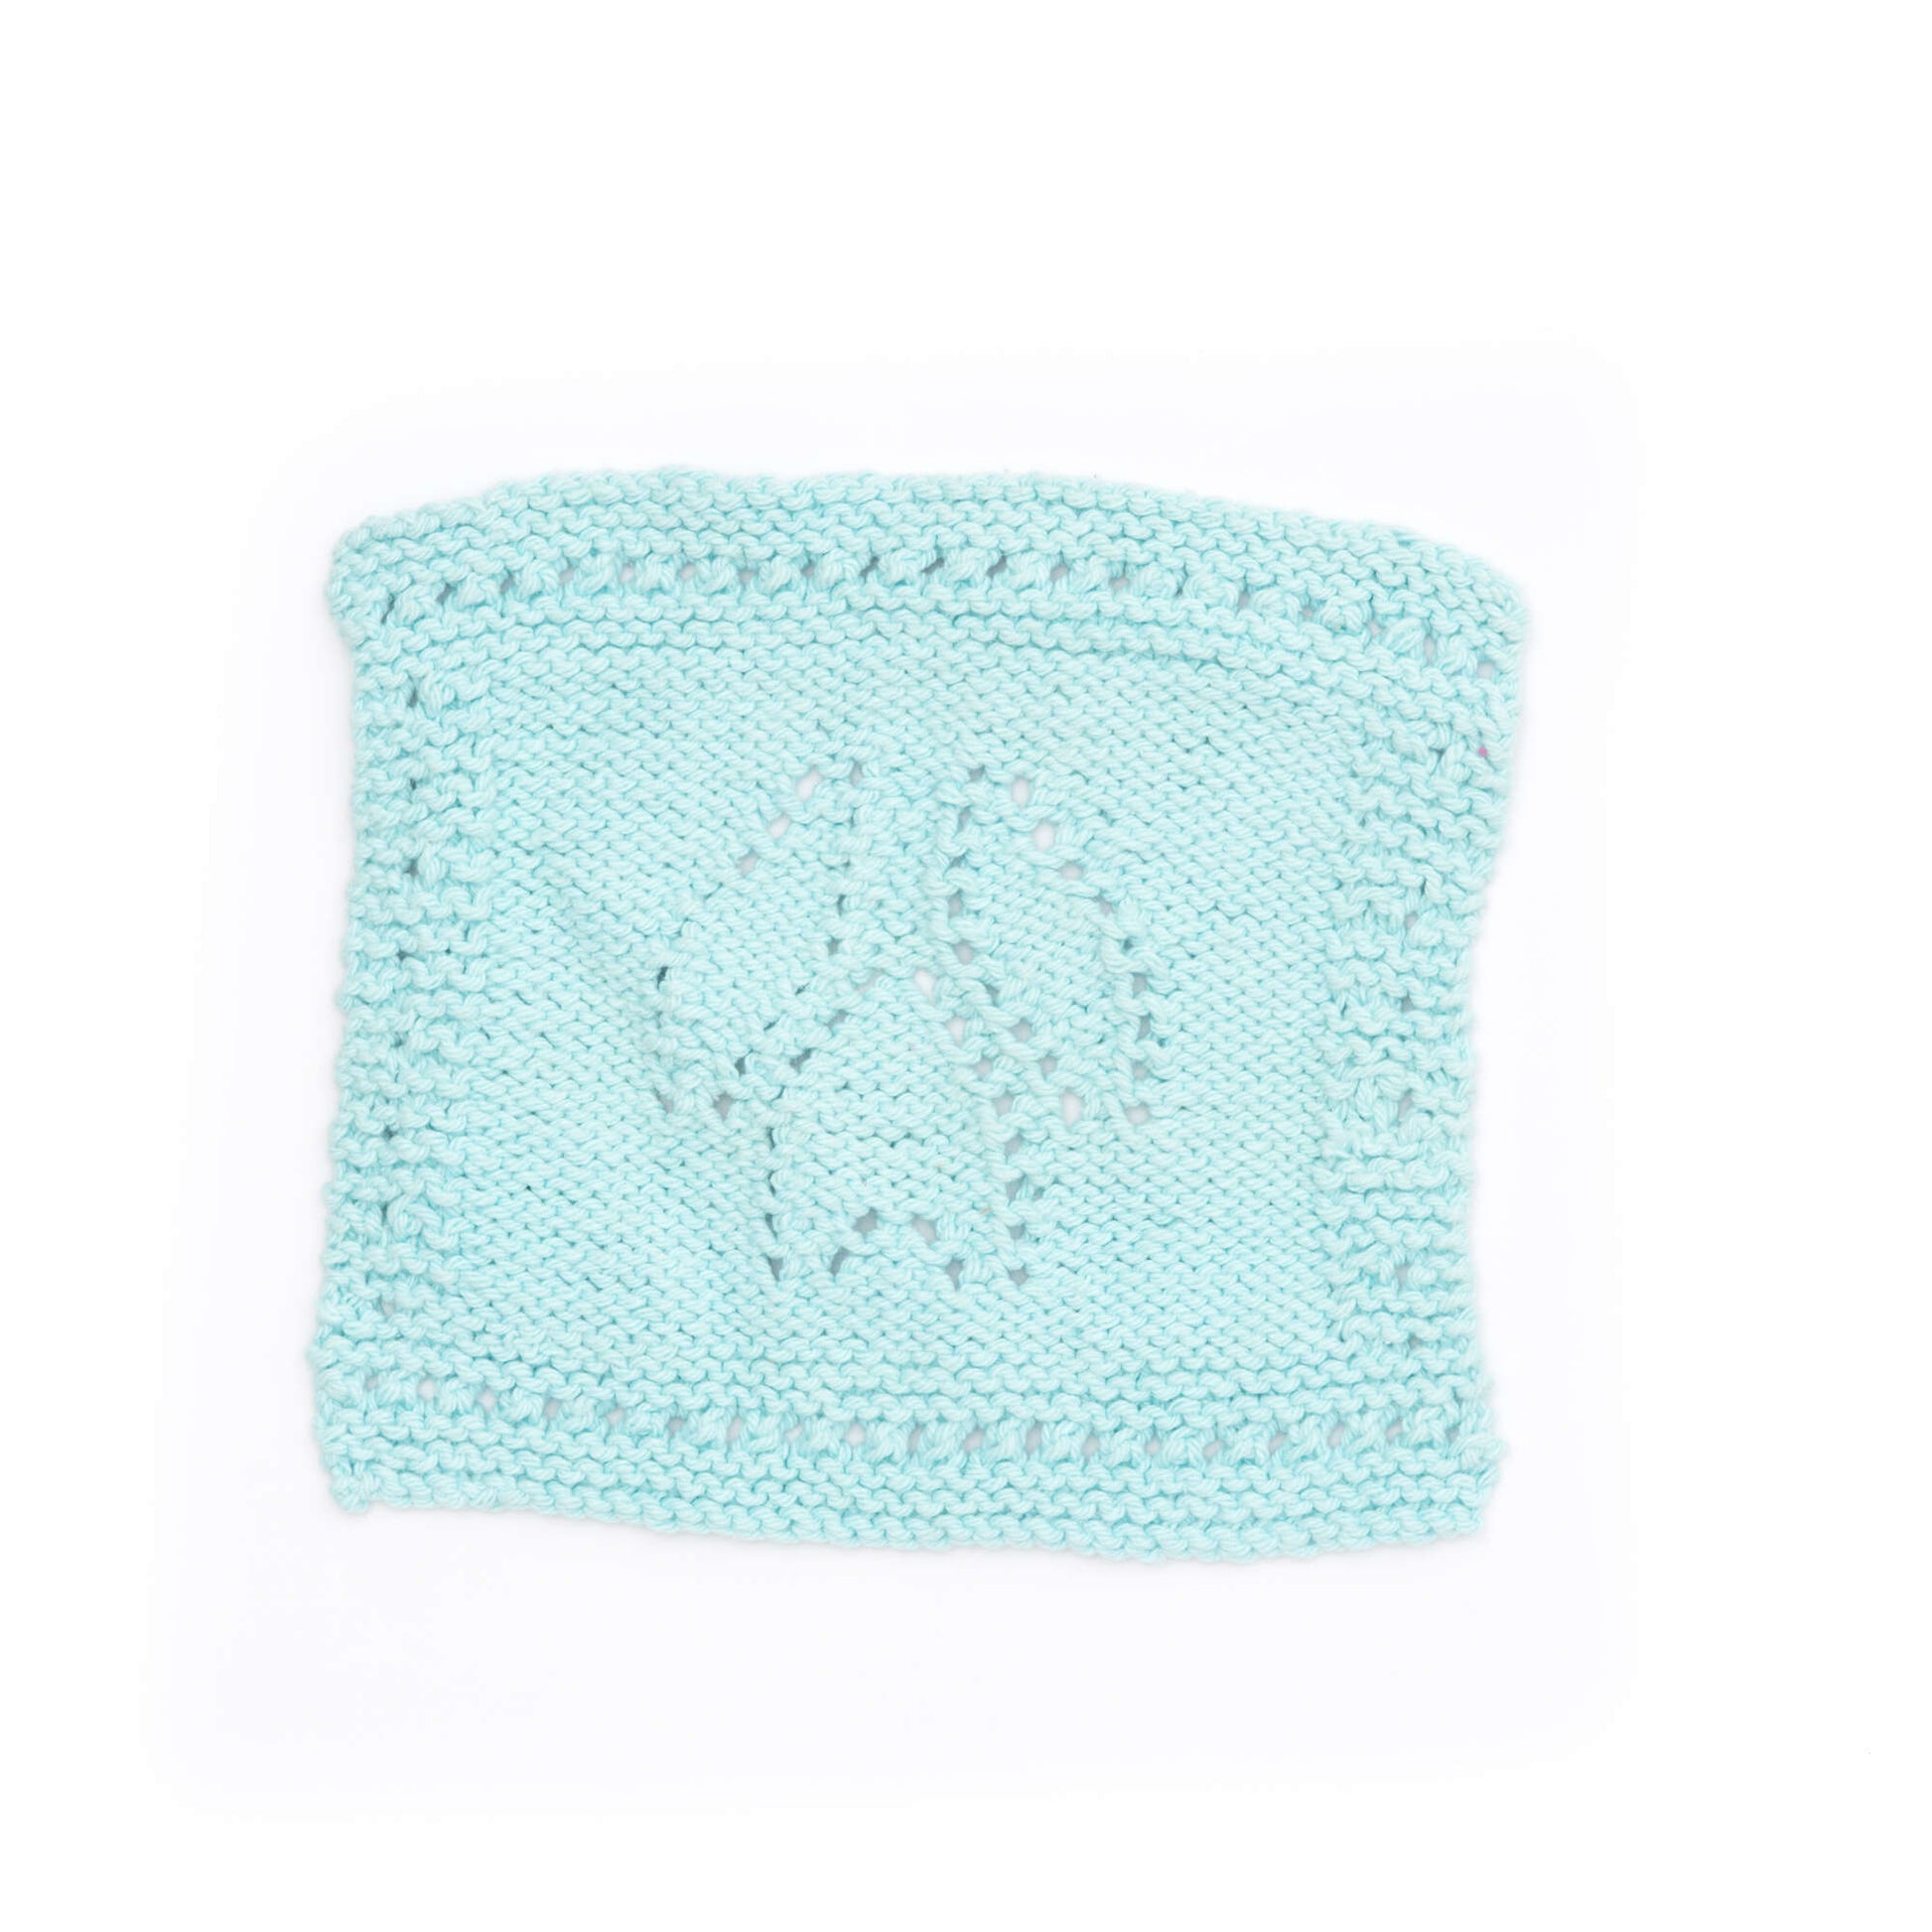 Free Lily Sugar'n Cream Spring Tulip Dishcloth Knit Pattern